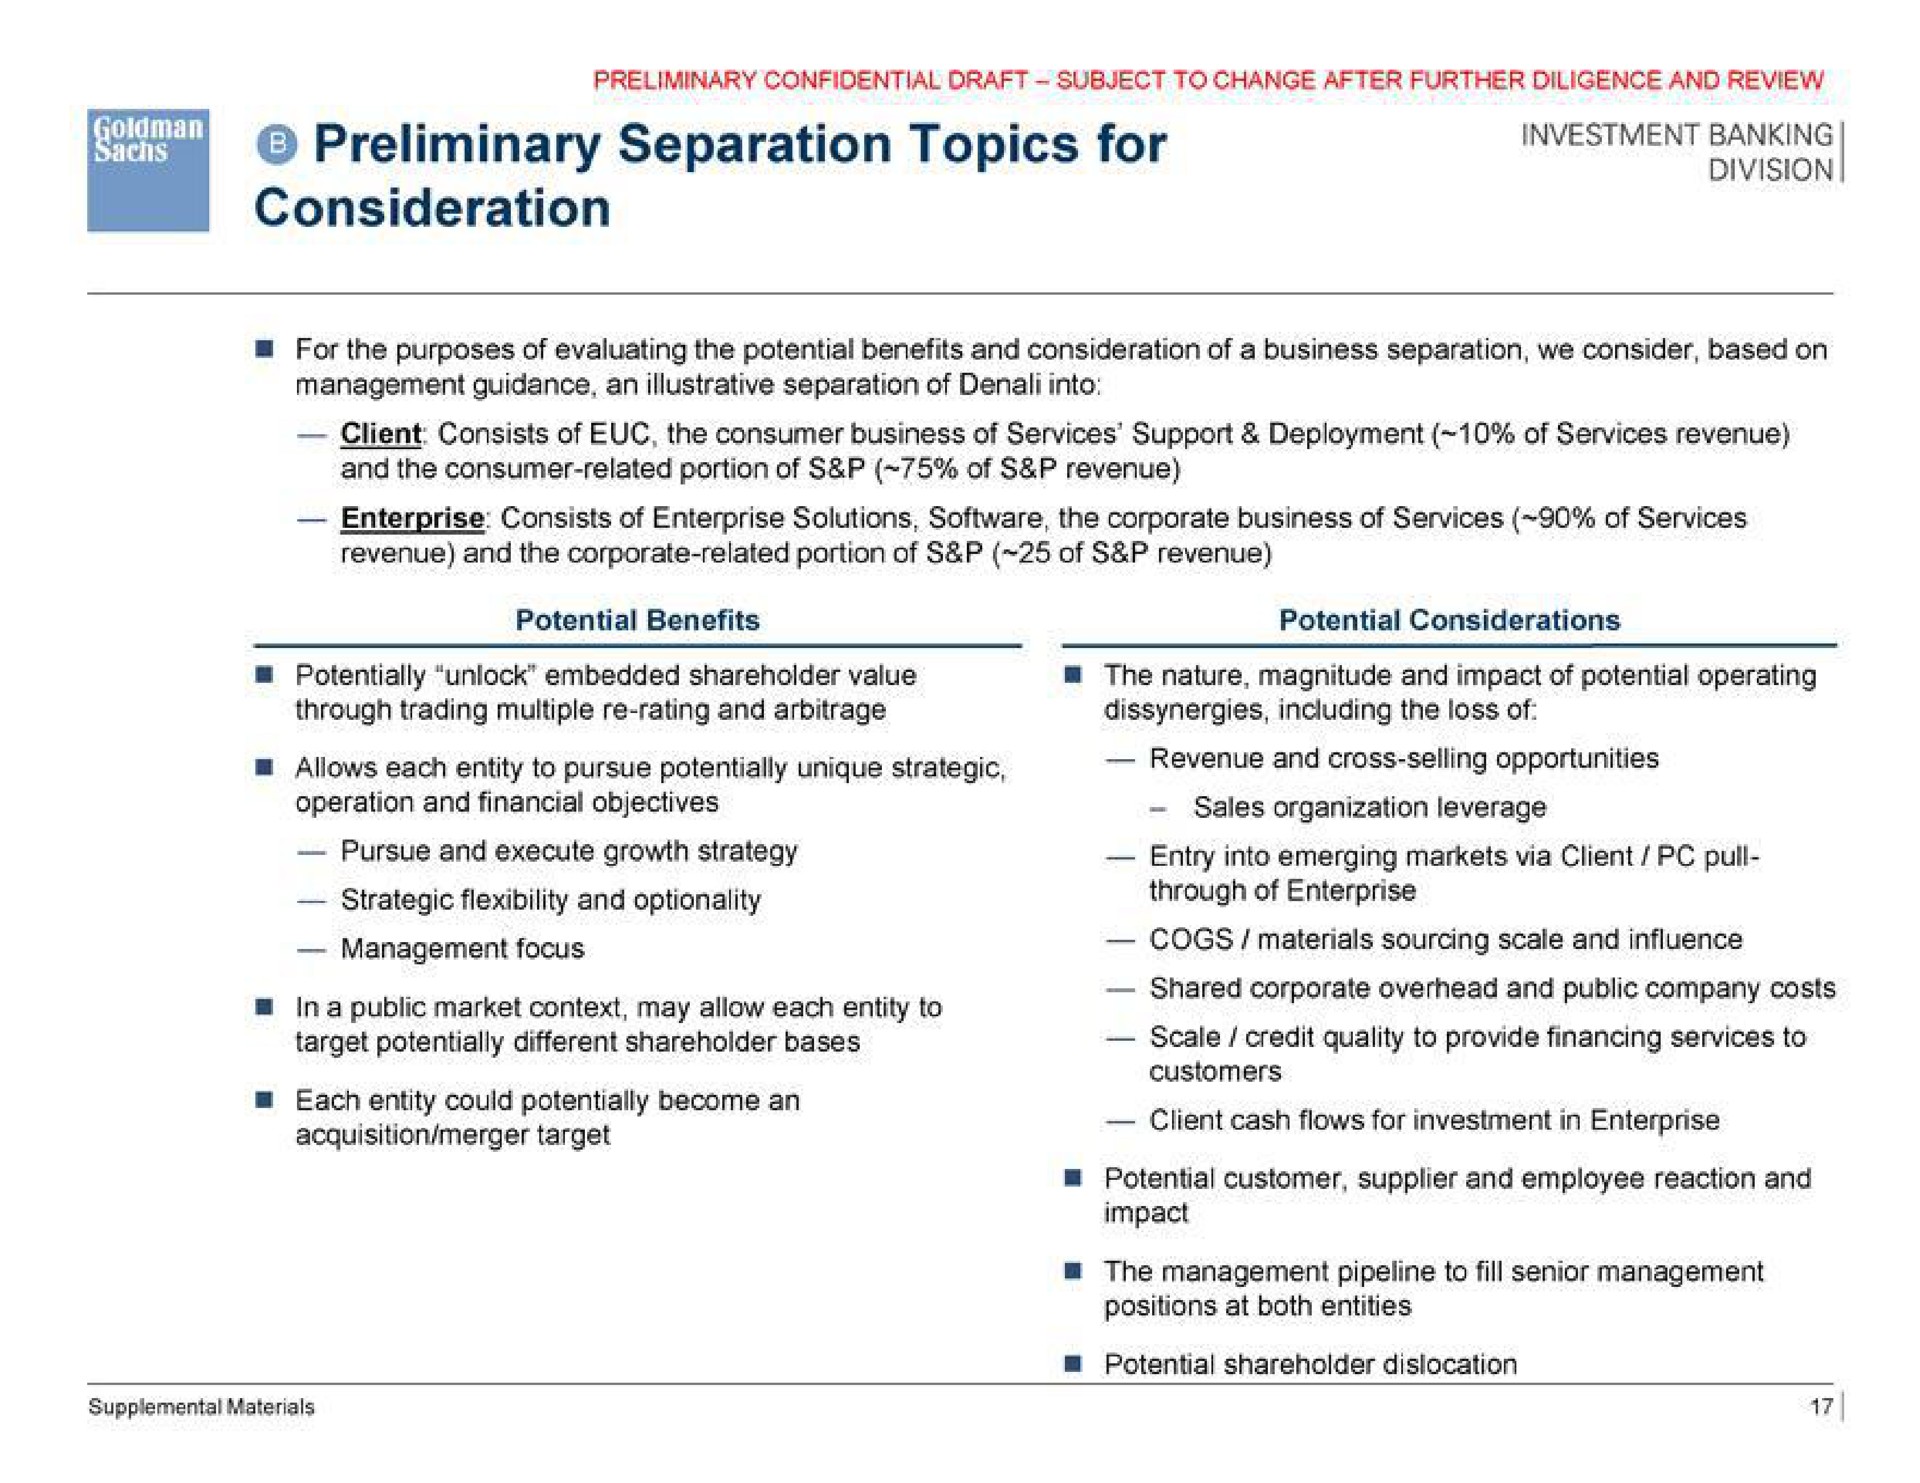 preliminary separation topics for consideration a strategic flexibility and optionality through of enterprise | Goldman Sachs